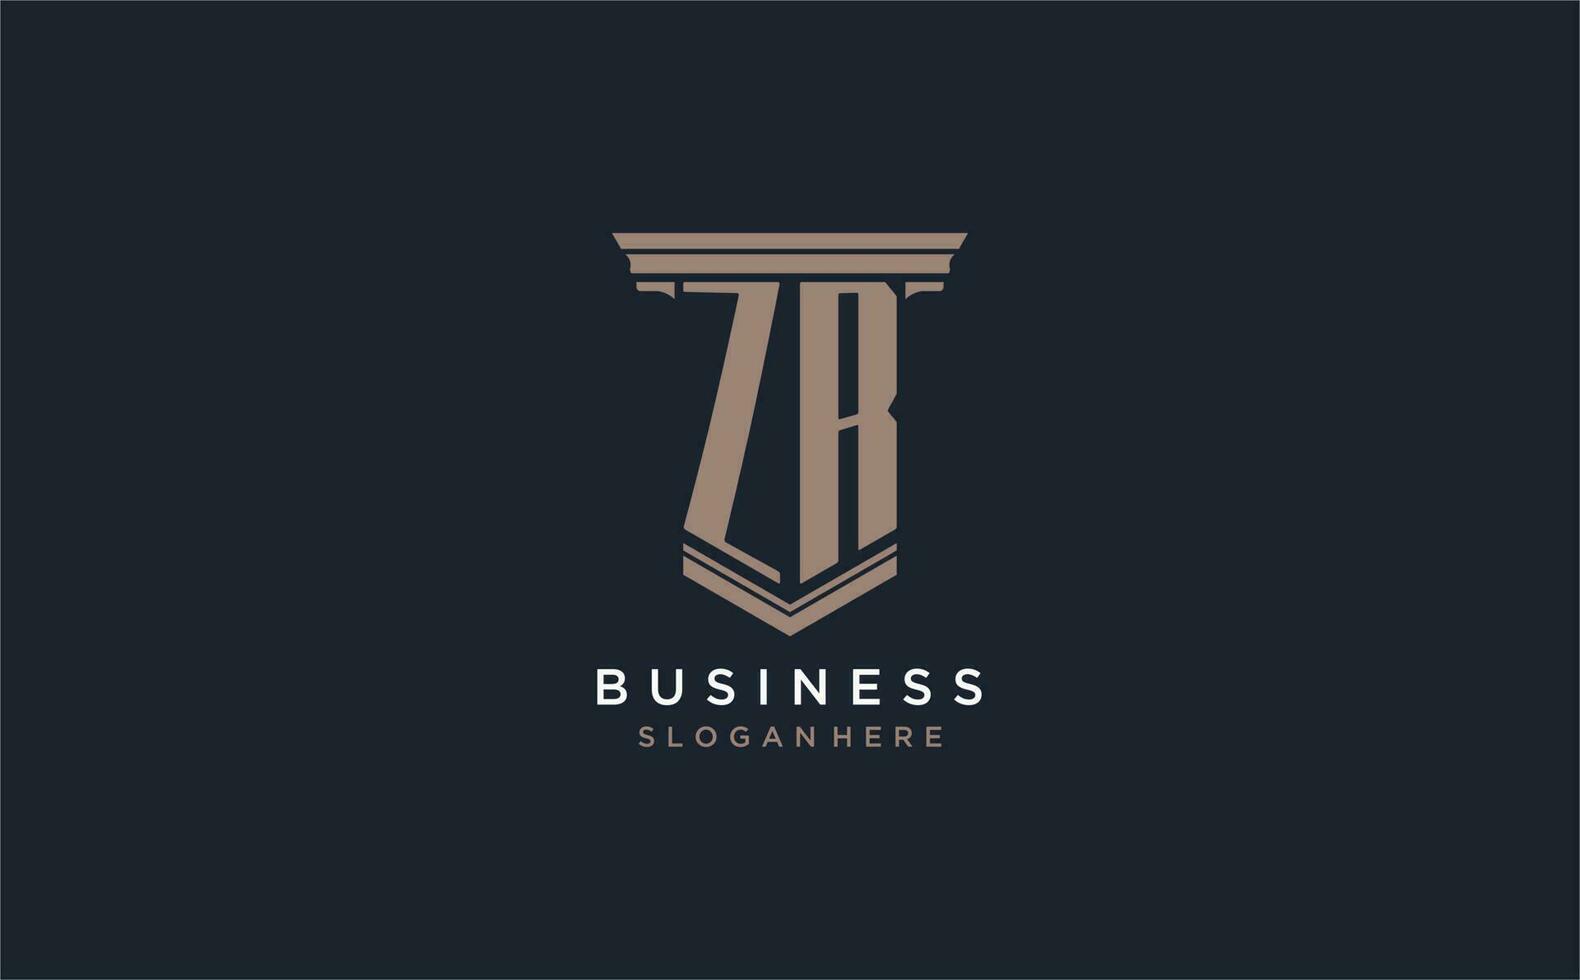 ZR initial logo with pillar style, luxury law firm logo design ideas vector